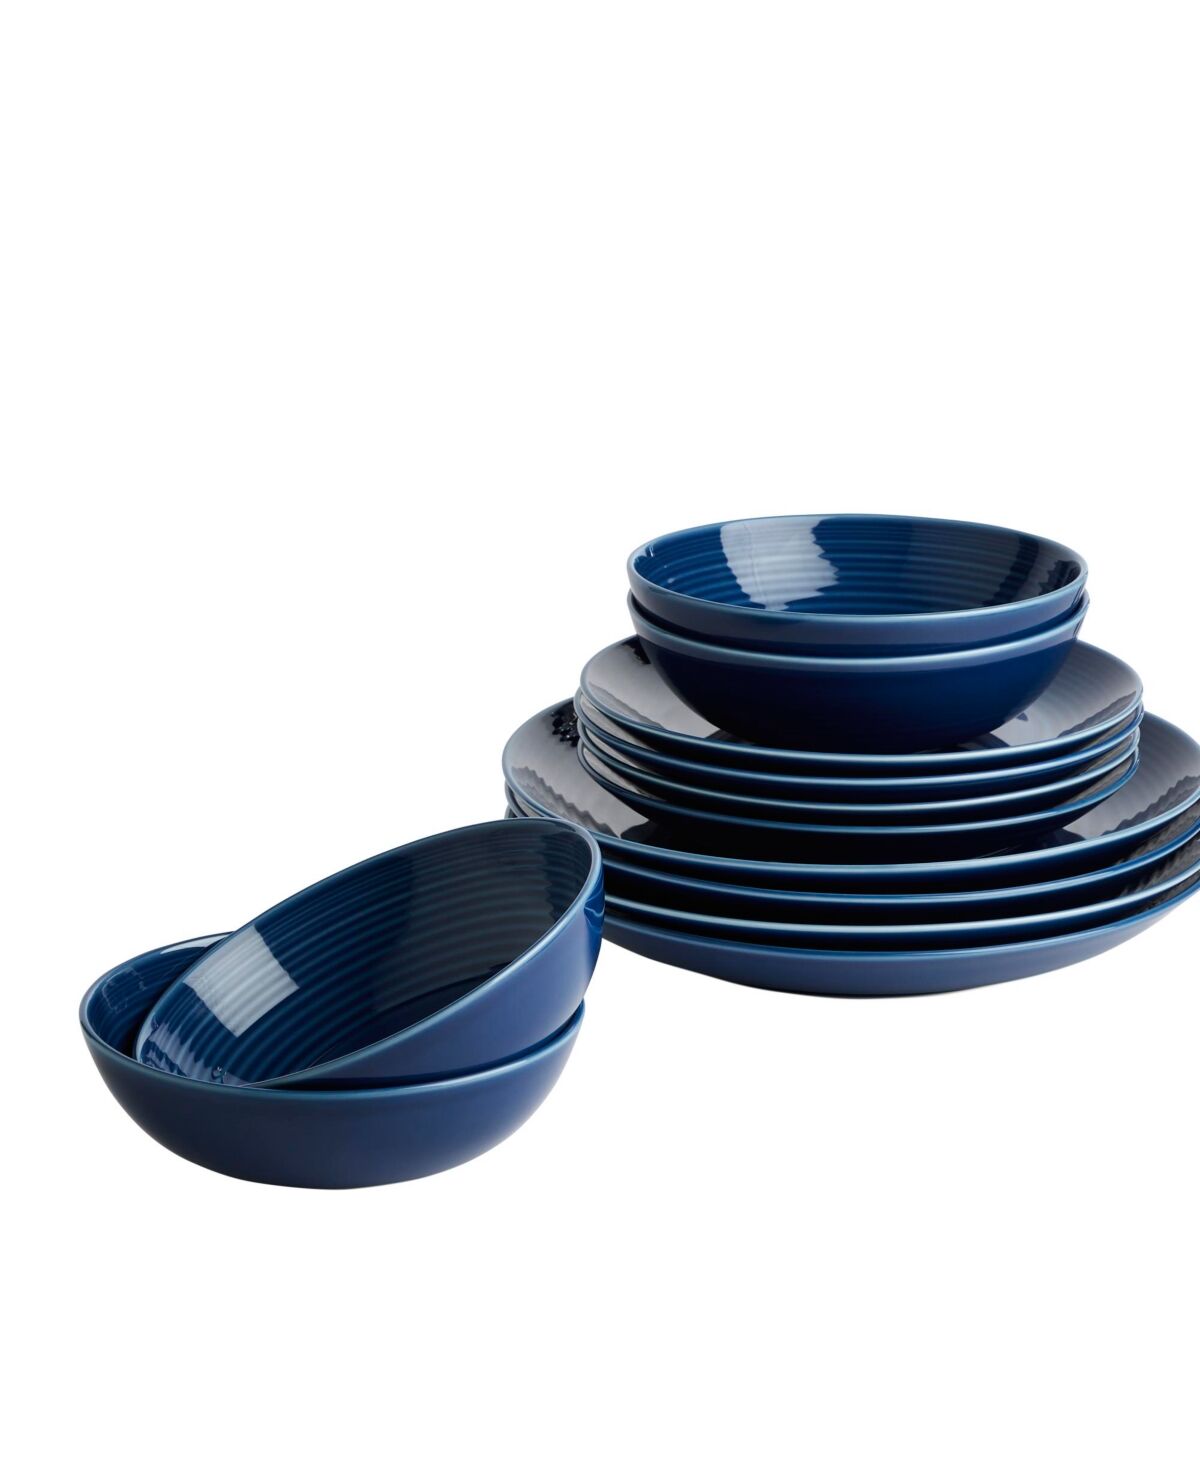 Royal Doulton Maze Denim 12 Piece Dinnerware Set, Service for 4 - Blue